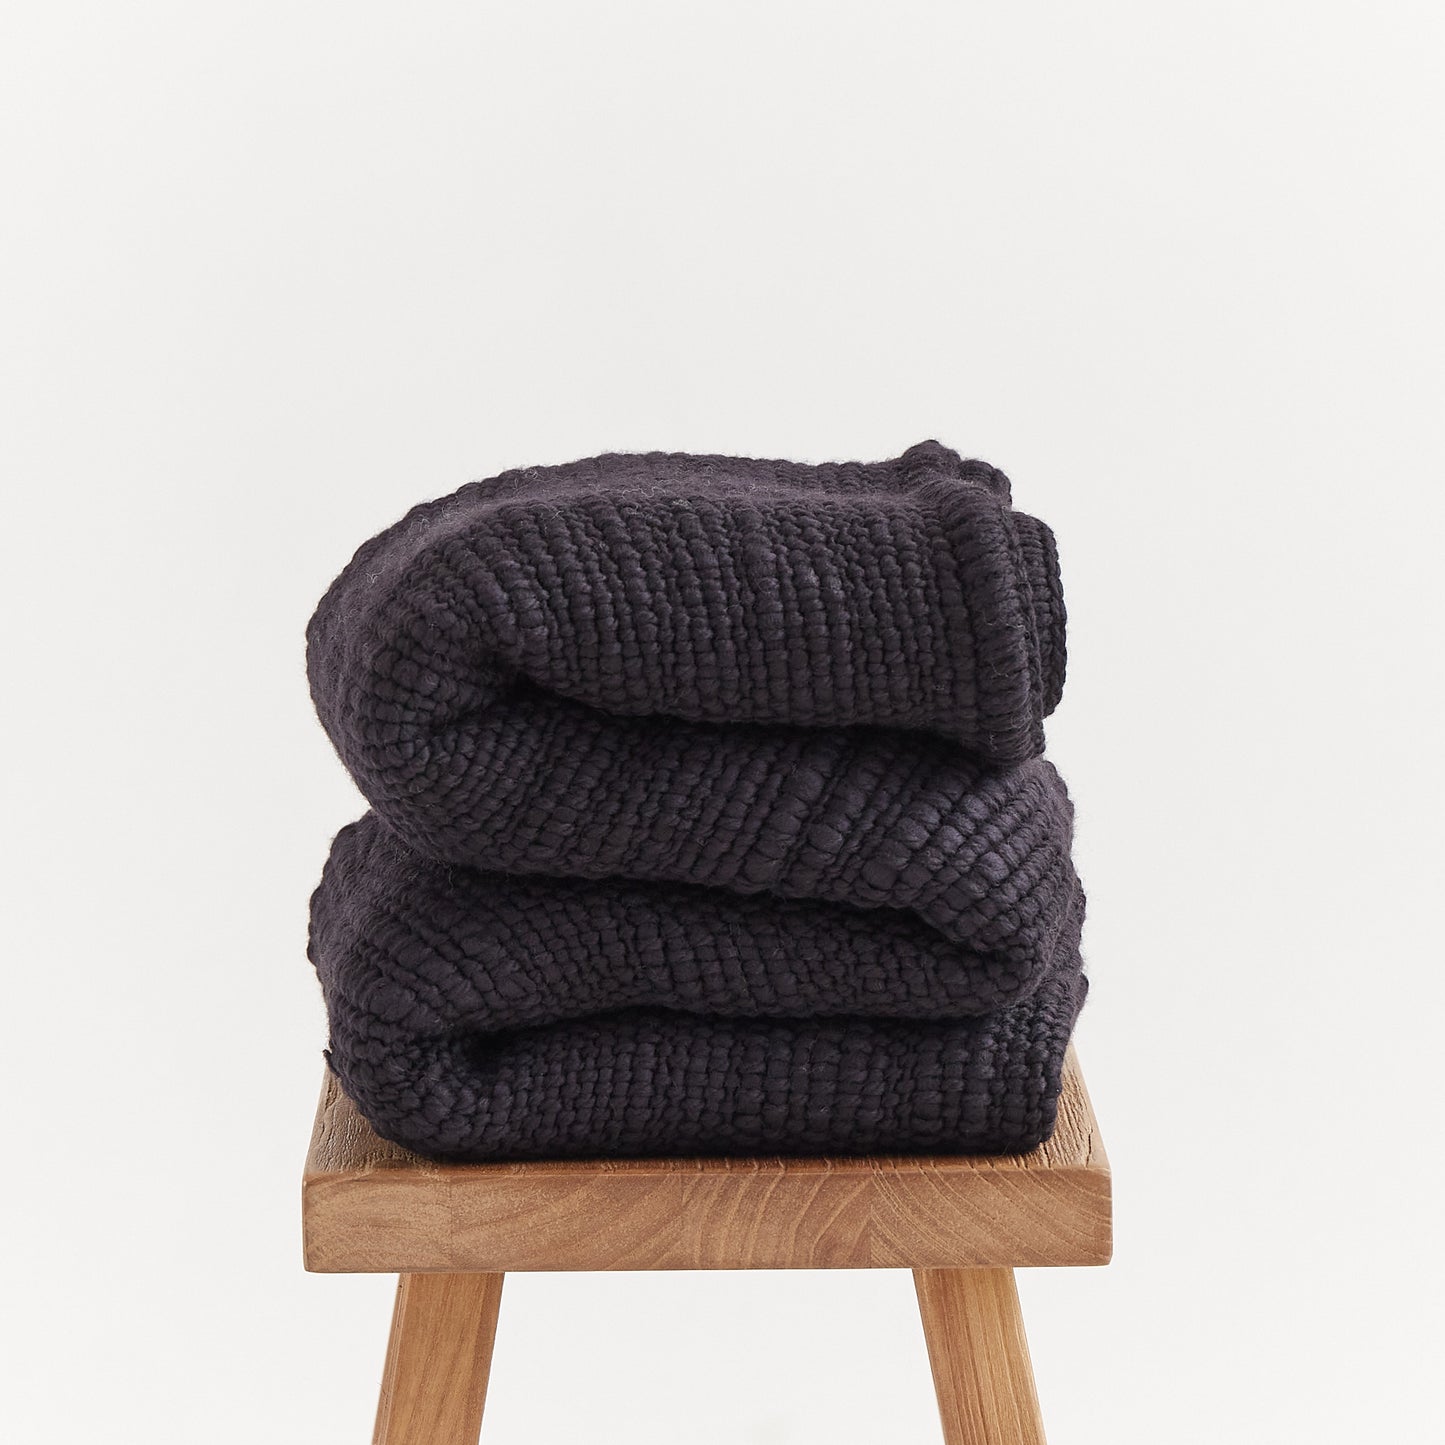 Handspun Merino Wool Blanket - Black Nordic Style & Handcrafted Comfort